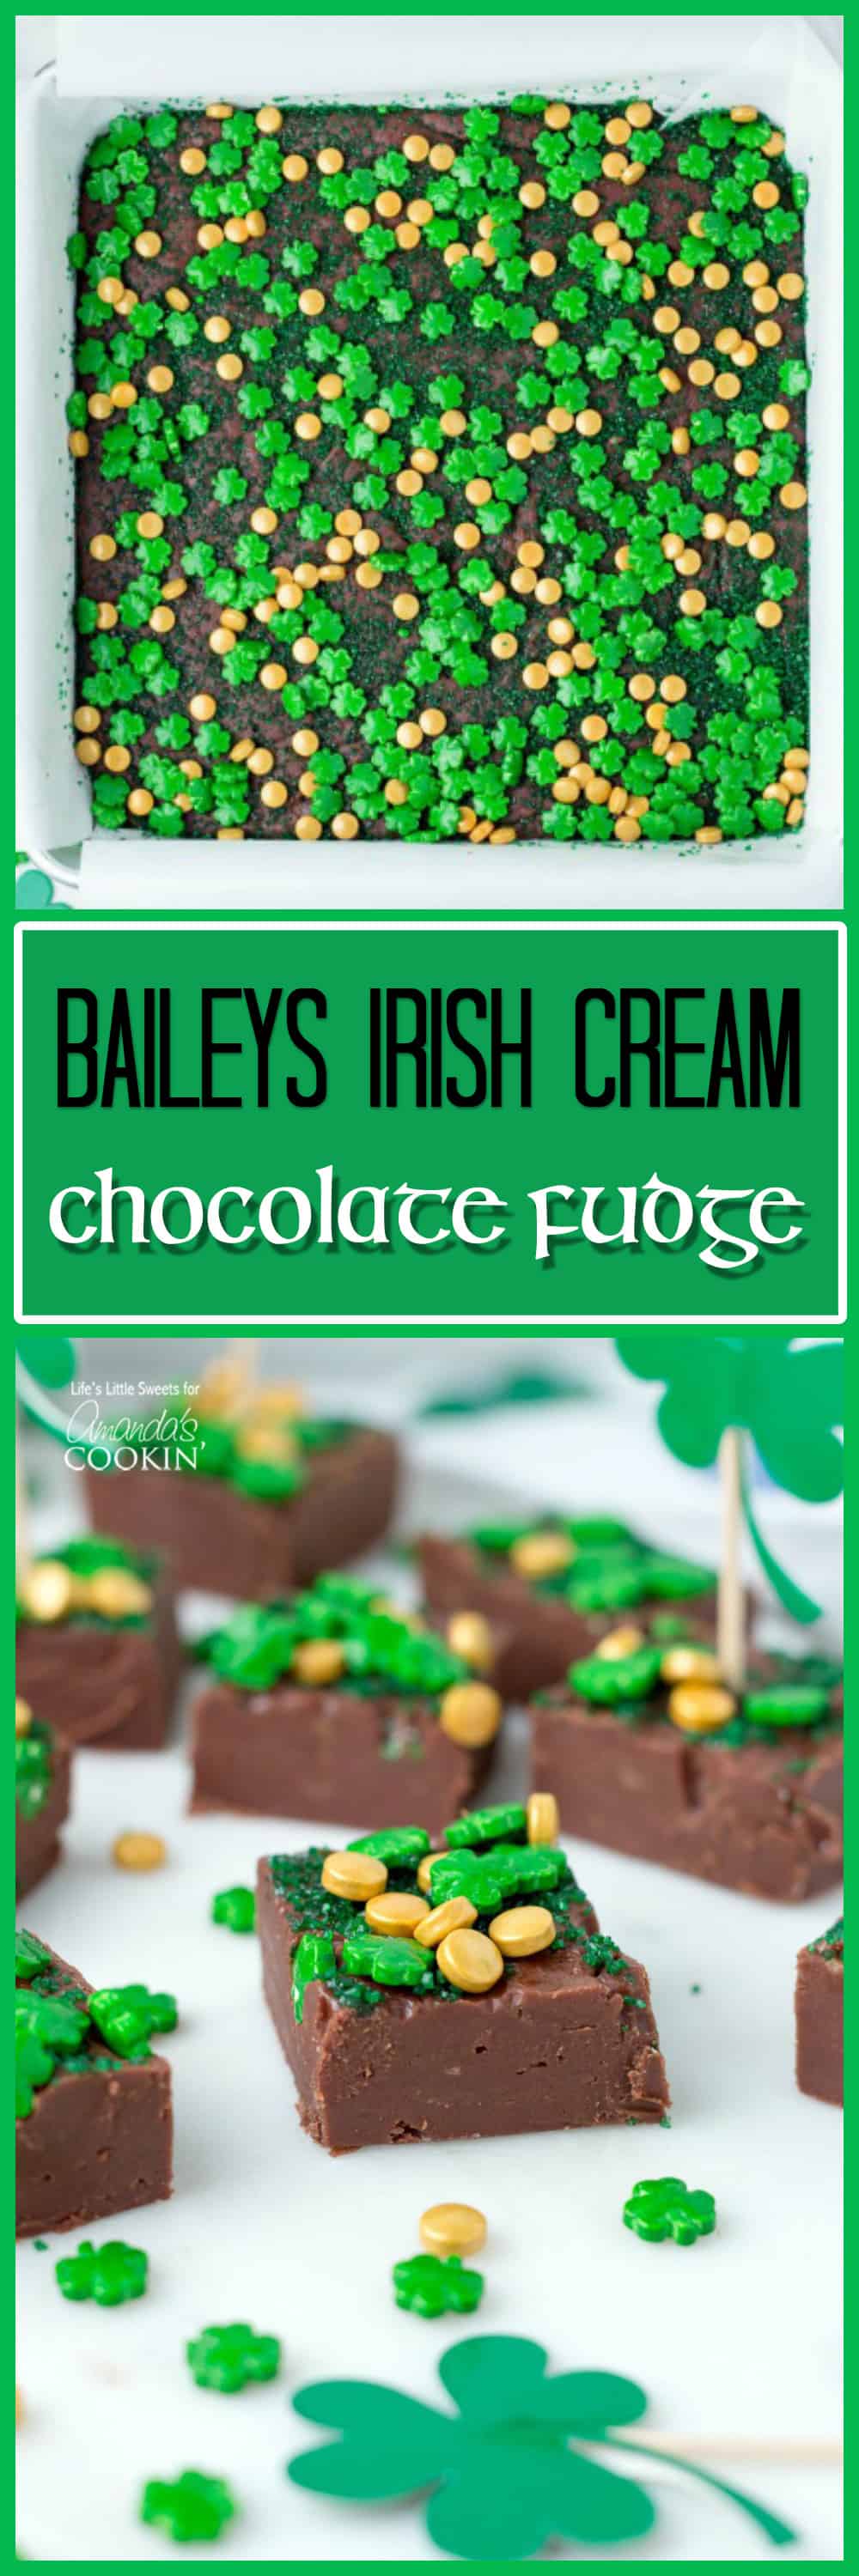 Baileys Irish Cream Chocolate Fudge: a decadent chocolate fudge recipe